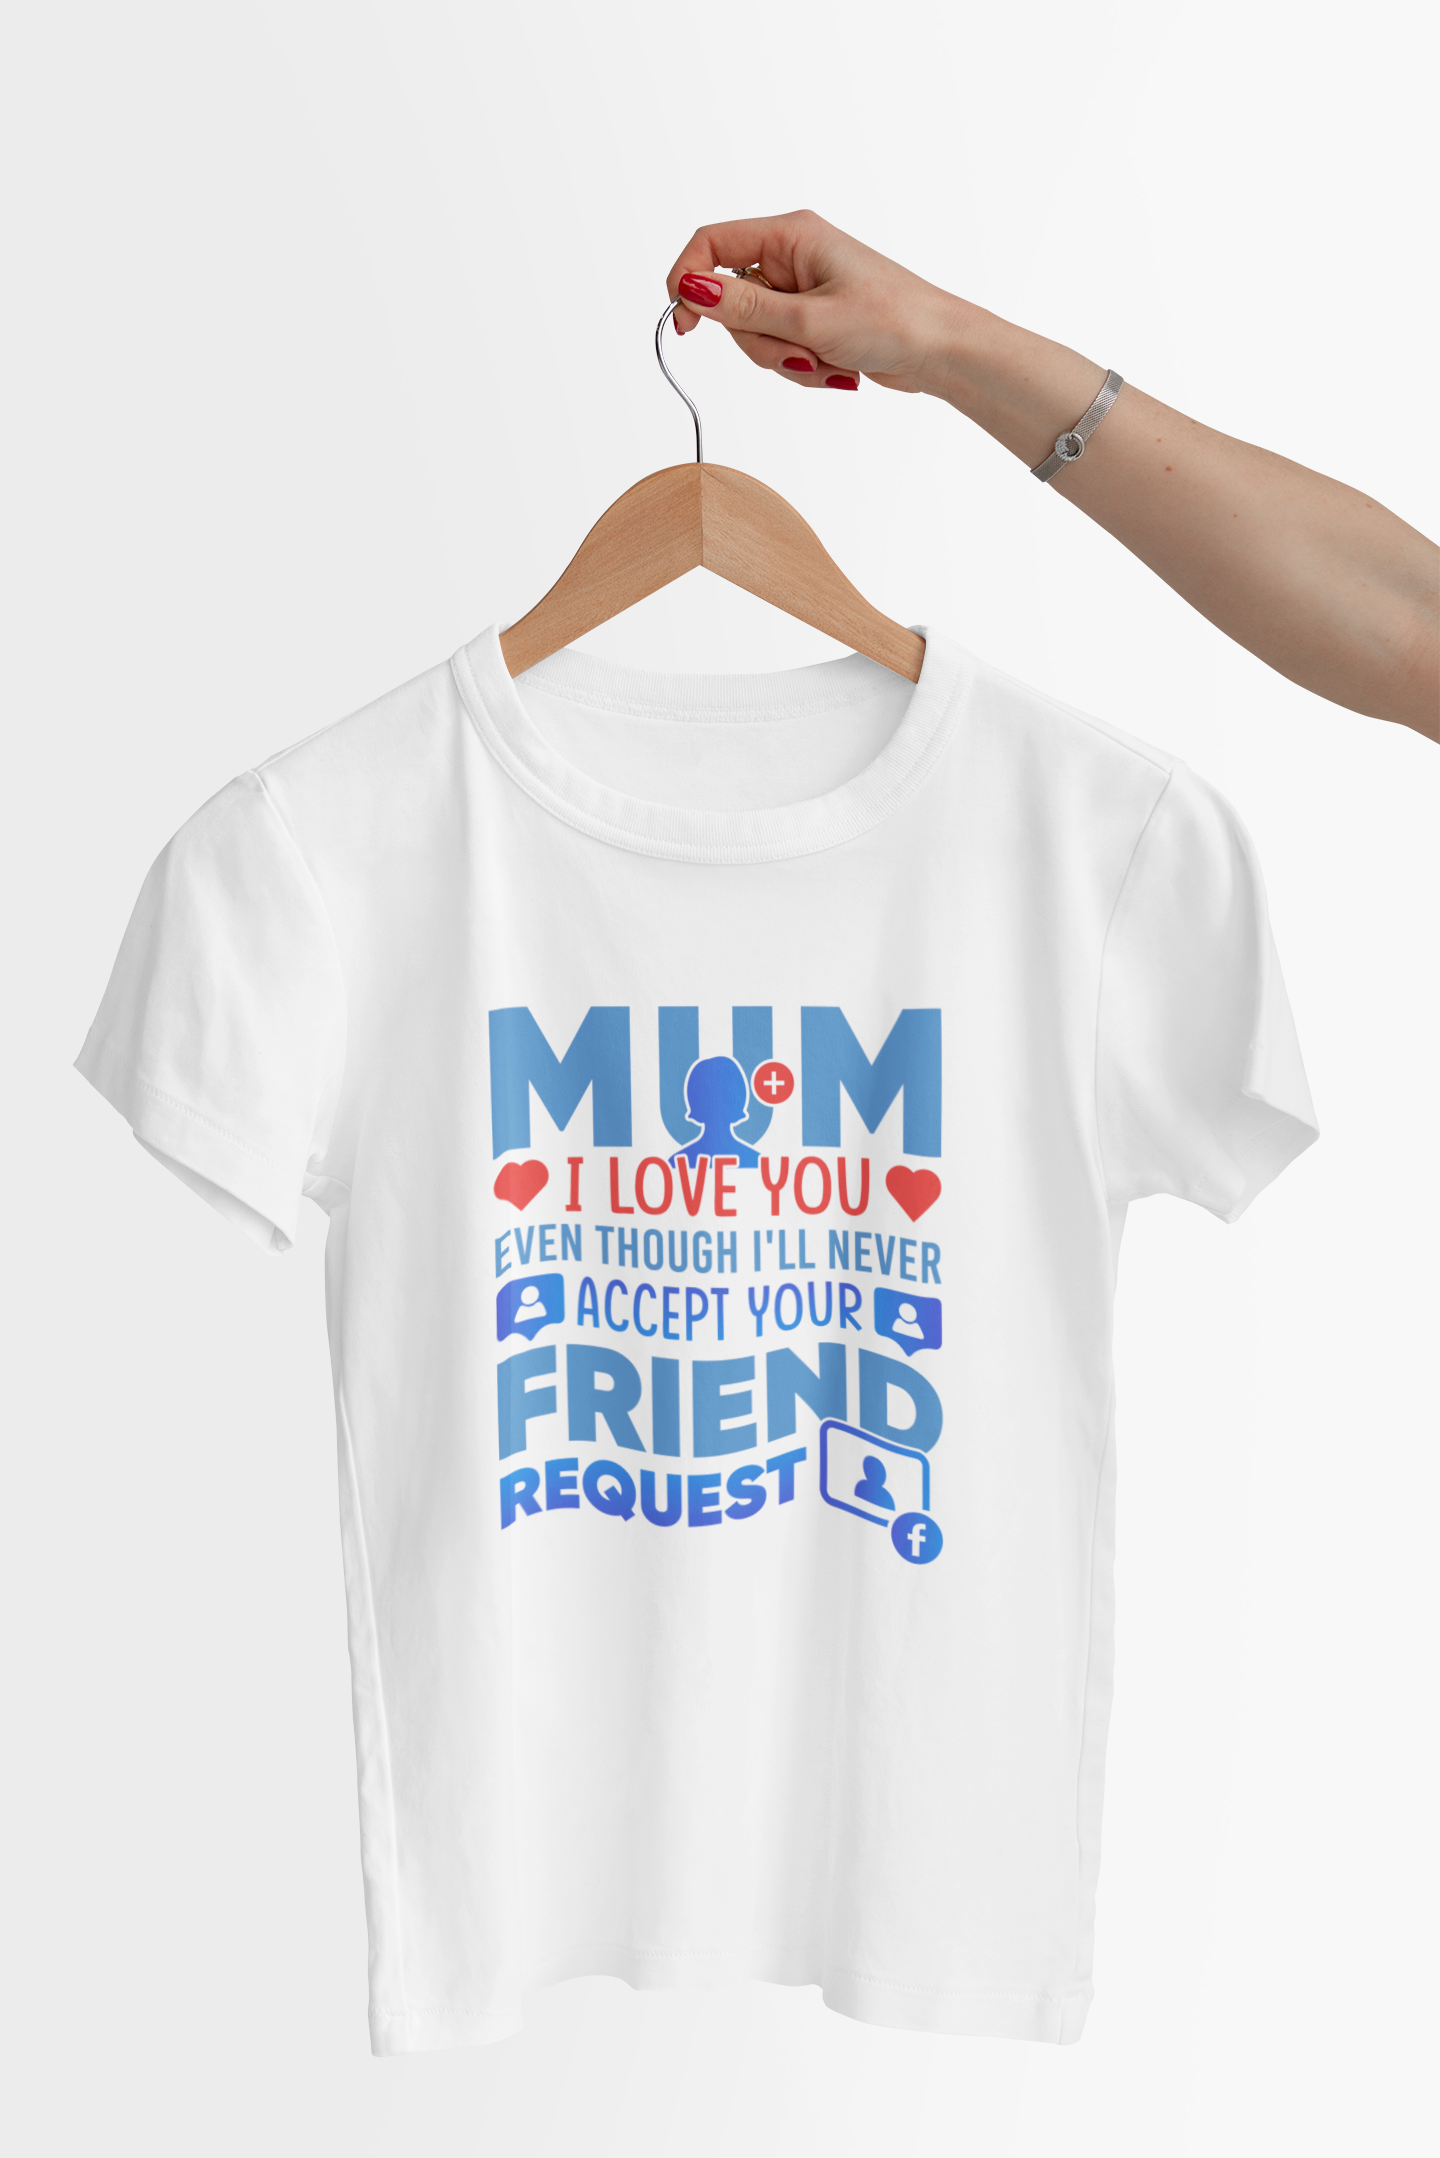 Mum and Social Media  - Adult Tee